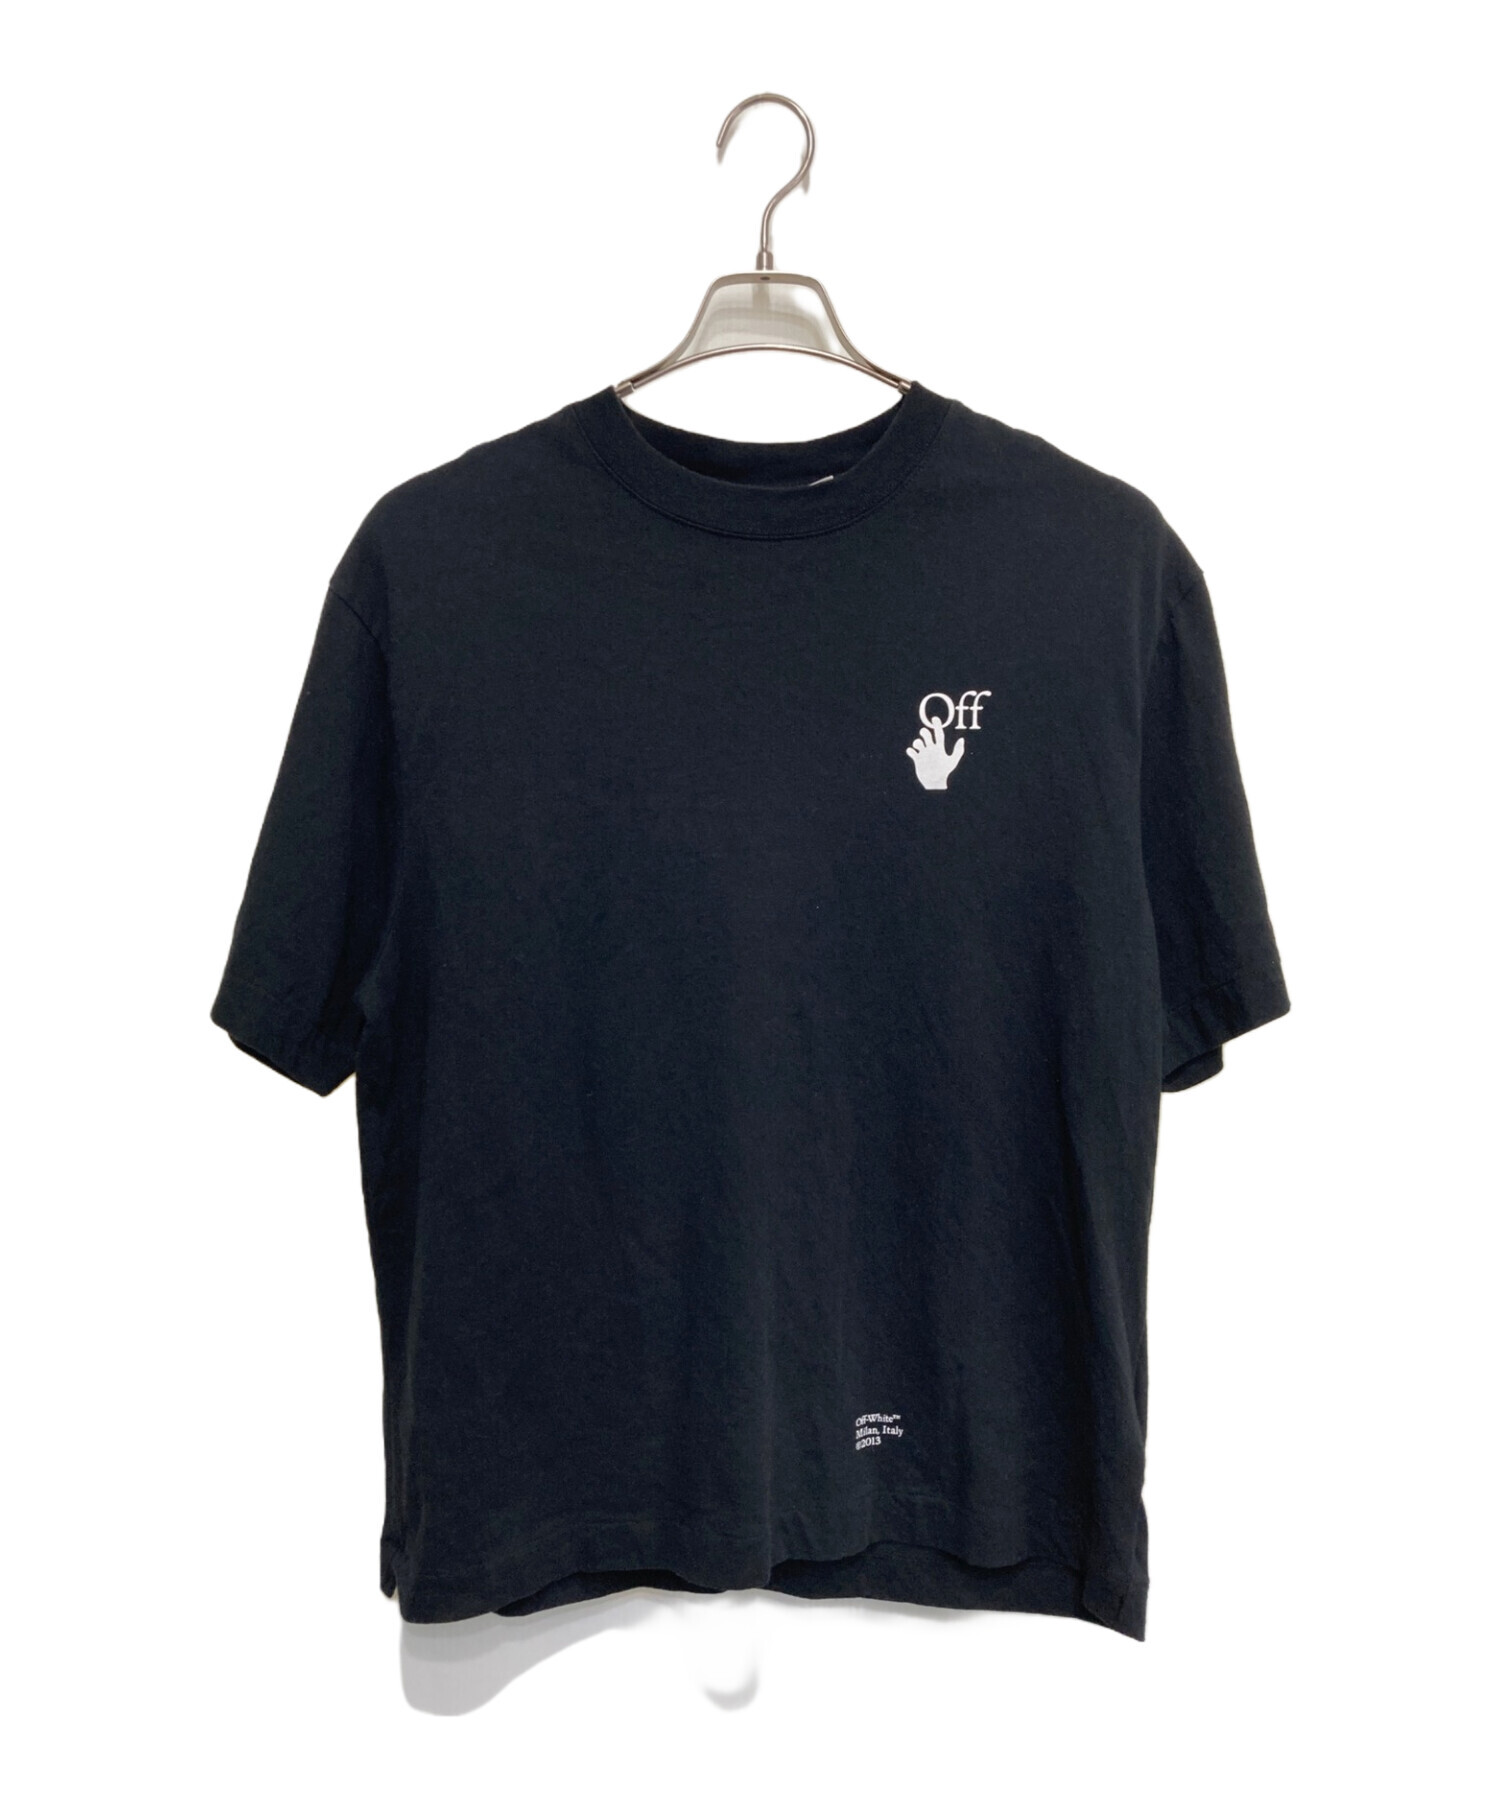 OFFWHITE (オフホワイト) Tシャツ ブラック サイズ:S